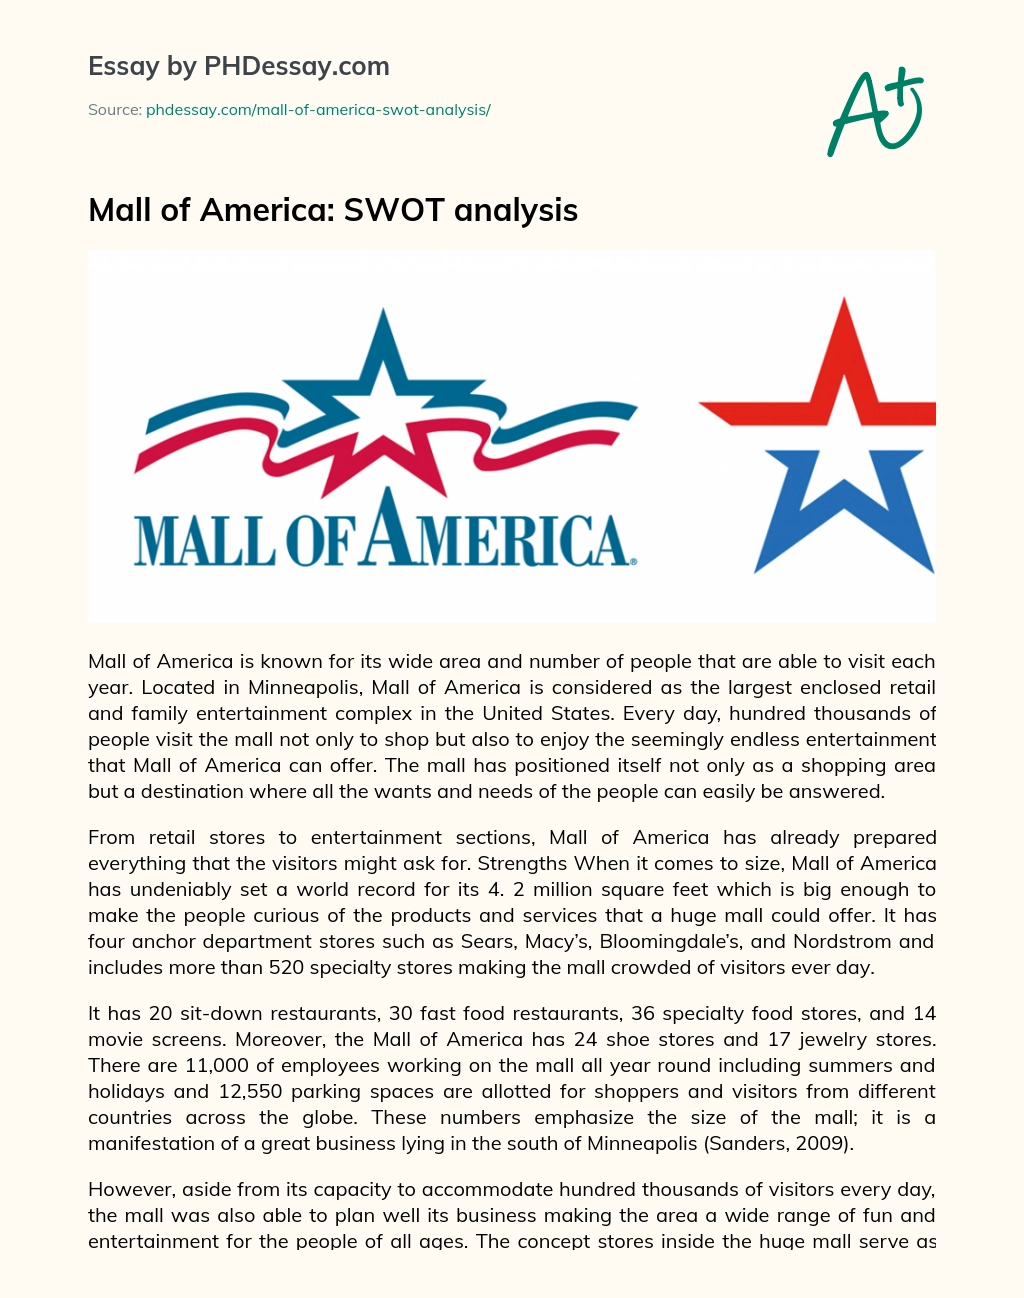 Mall of America: SWOT analysis essay